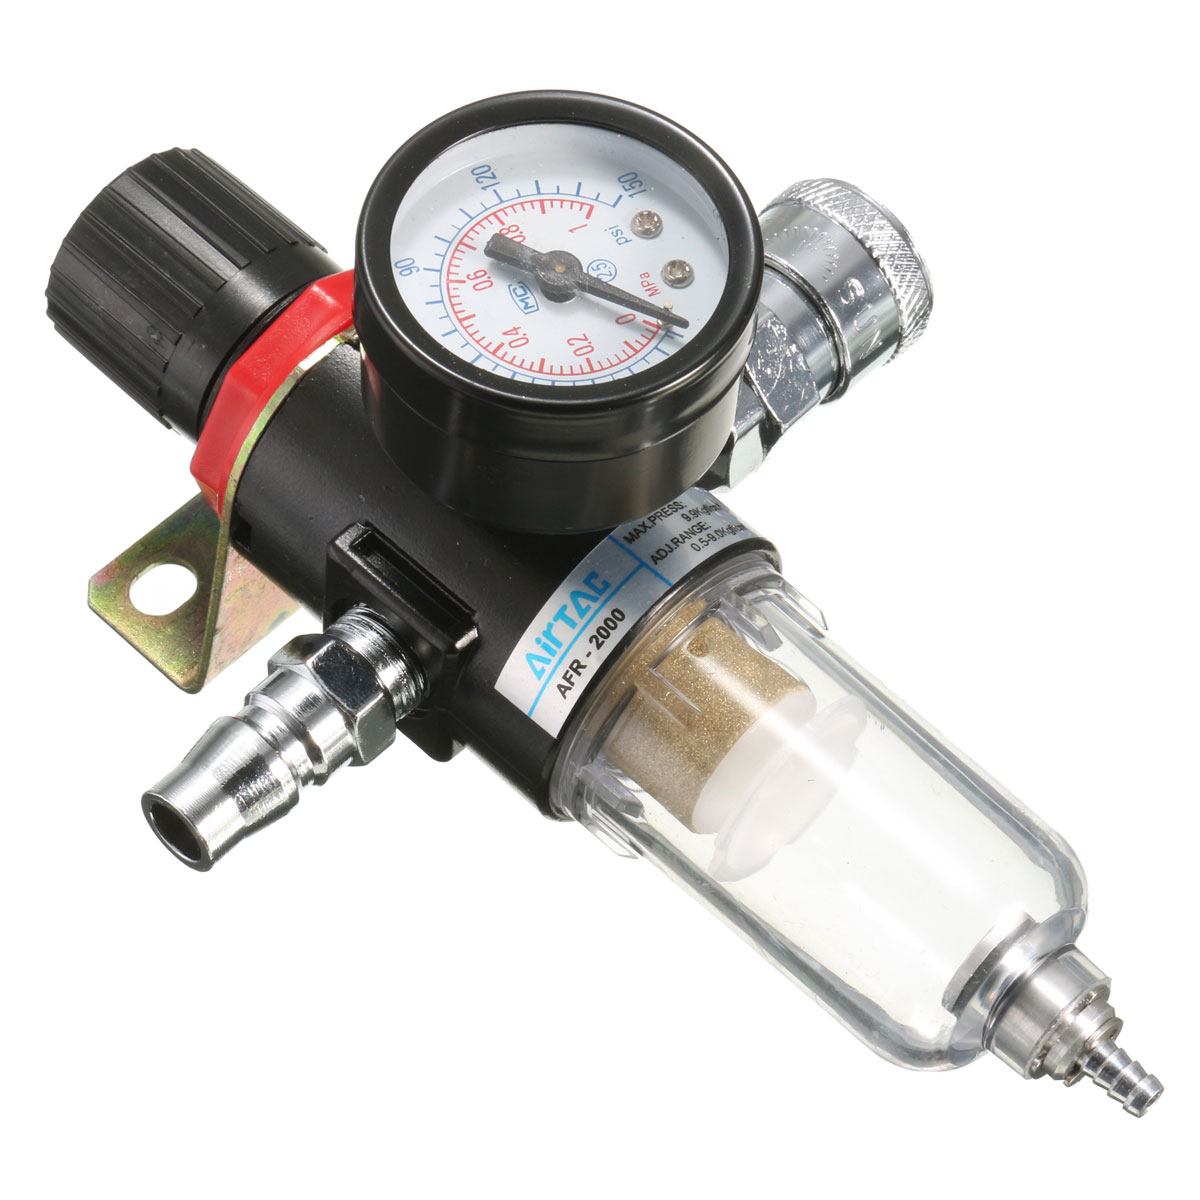 1/4"Air Compressor Moisture Filter Trap Oil Water Filter Trap Regulator Gauge 